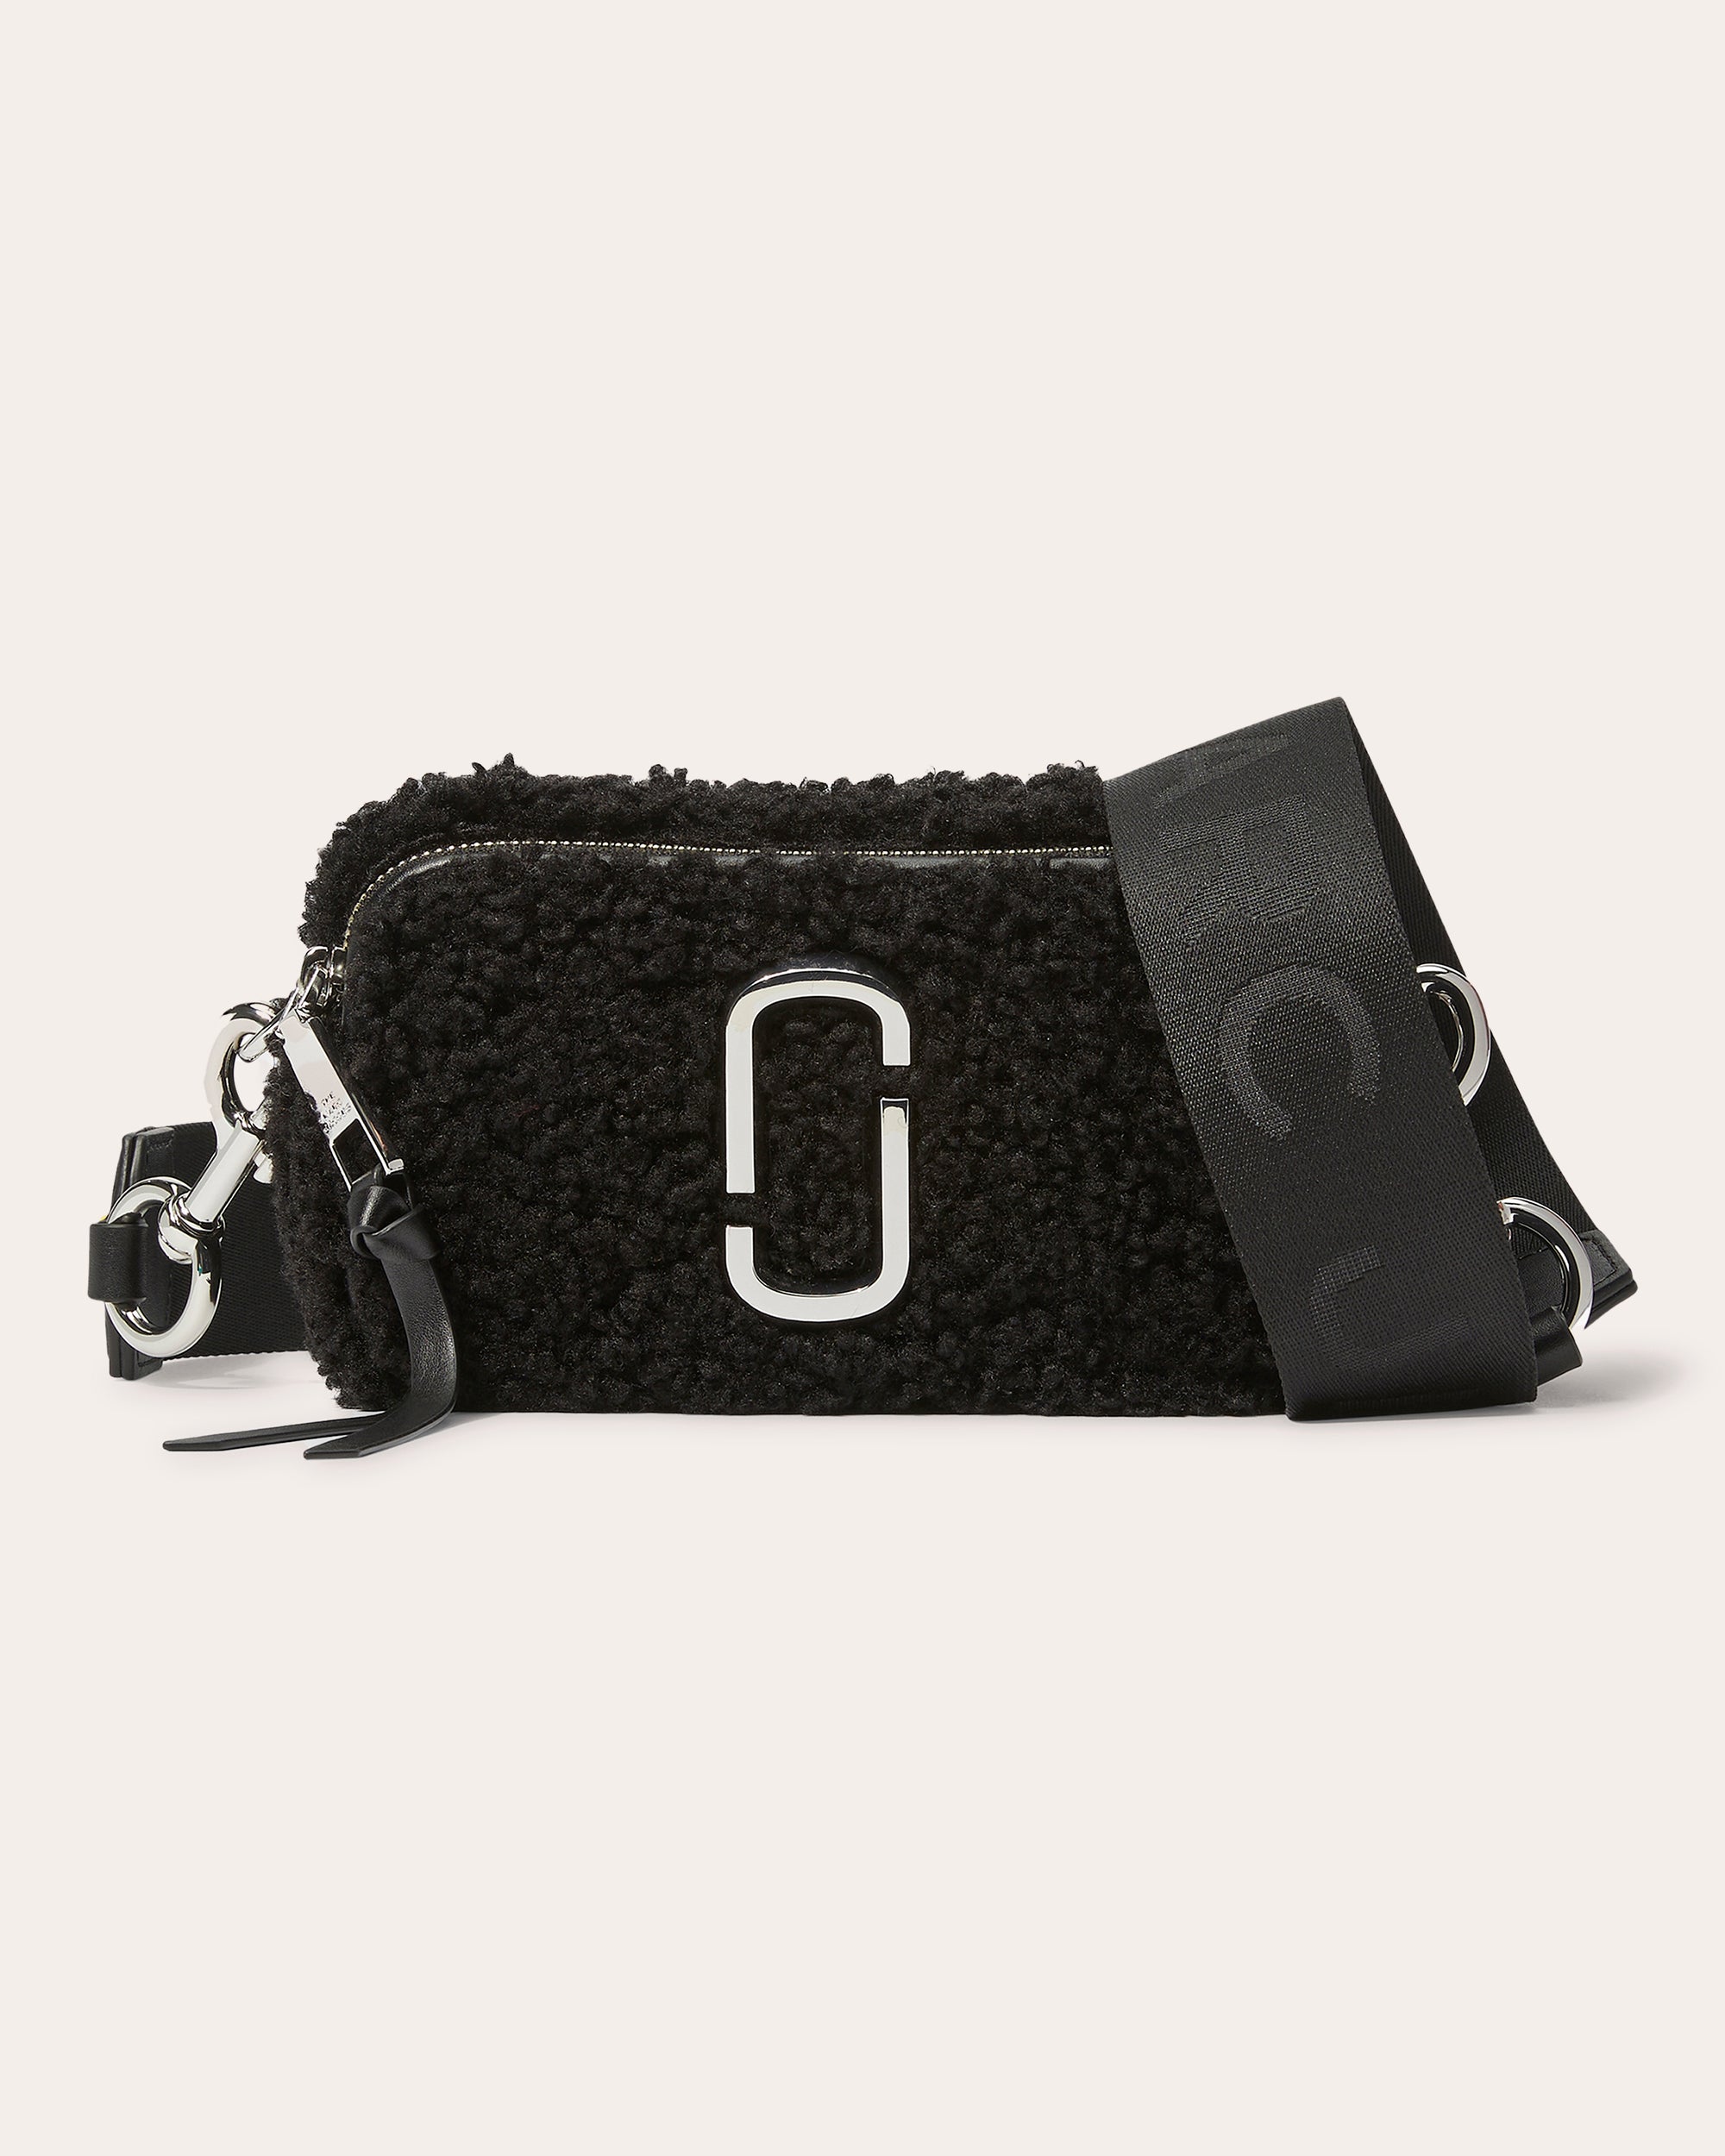 MARCJACOB Black Sling Bag MJ Snapshot Camera Bag Full Black Black